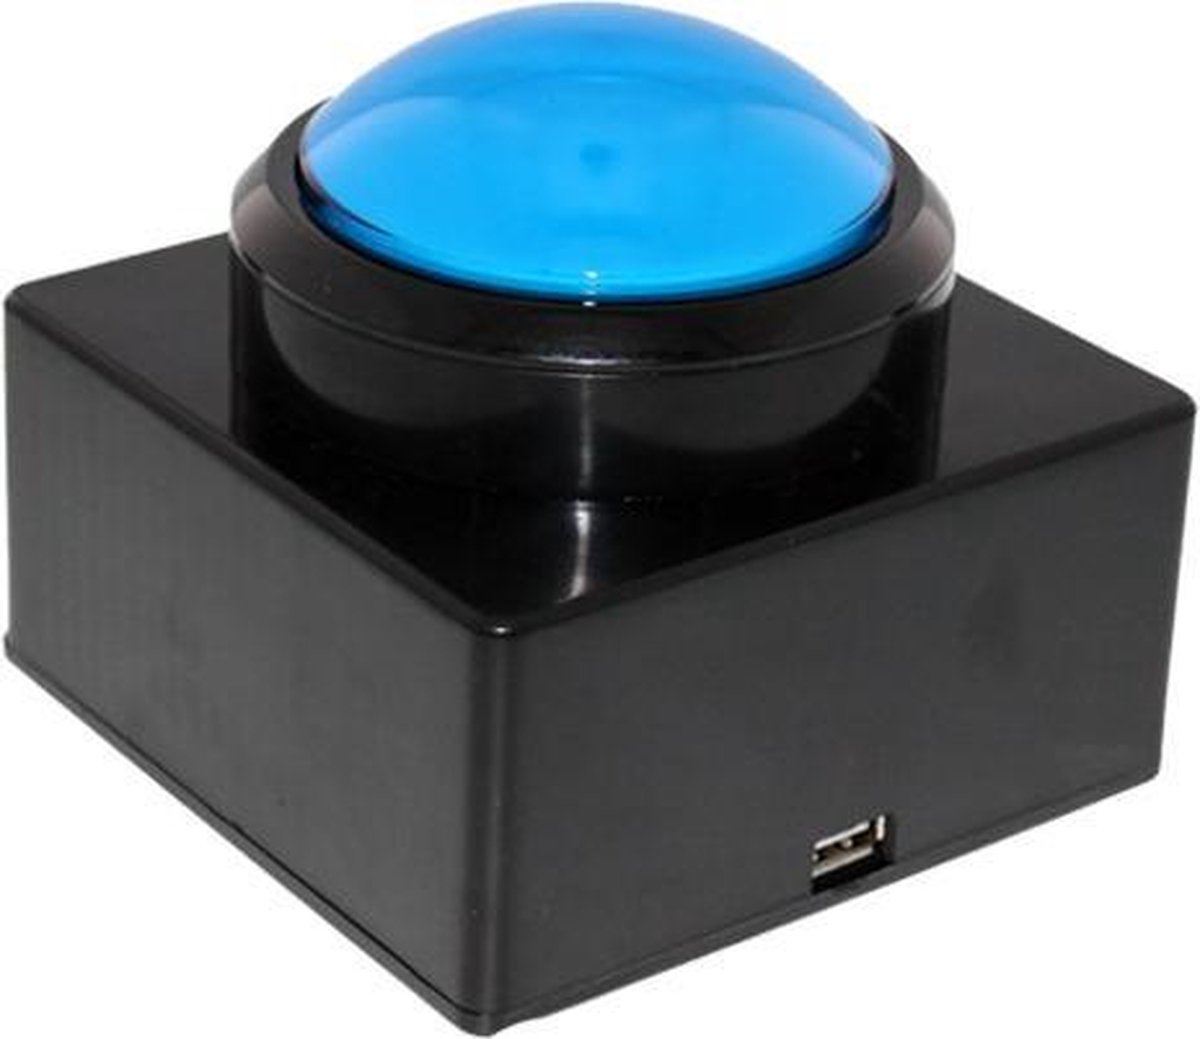 QuizTools USB buzzer drukknop verlicht, blauw